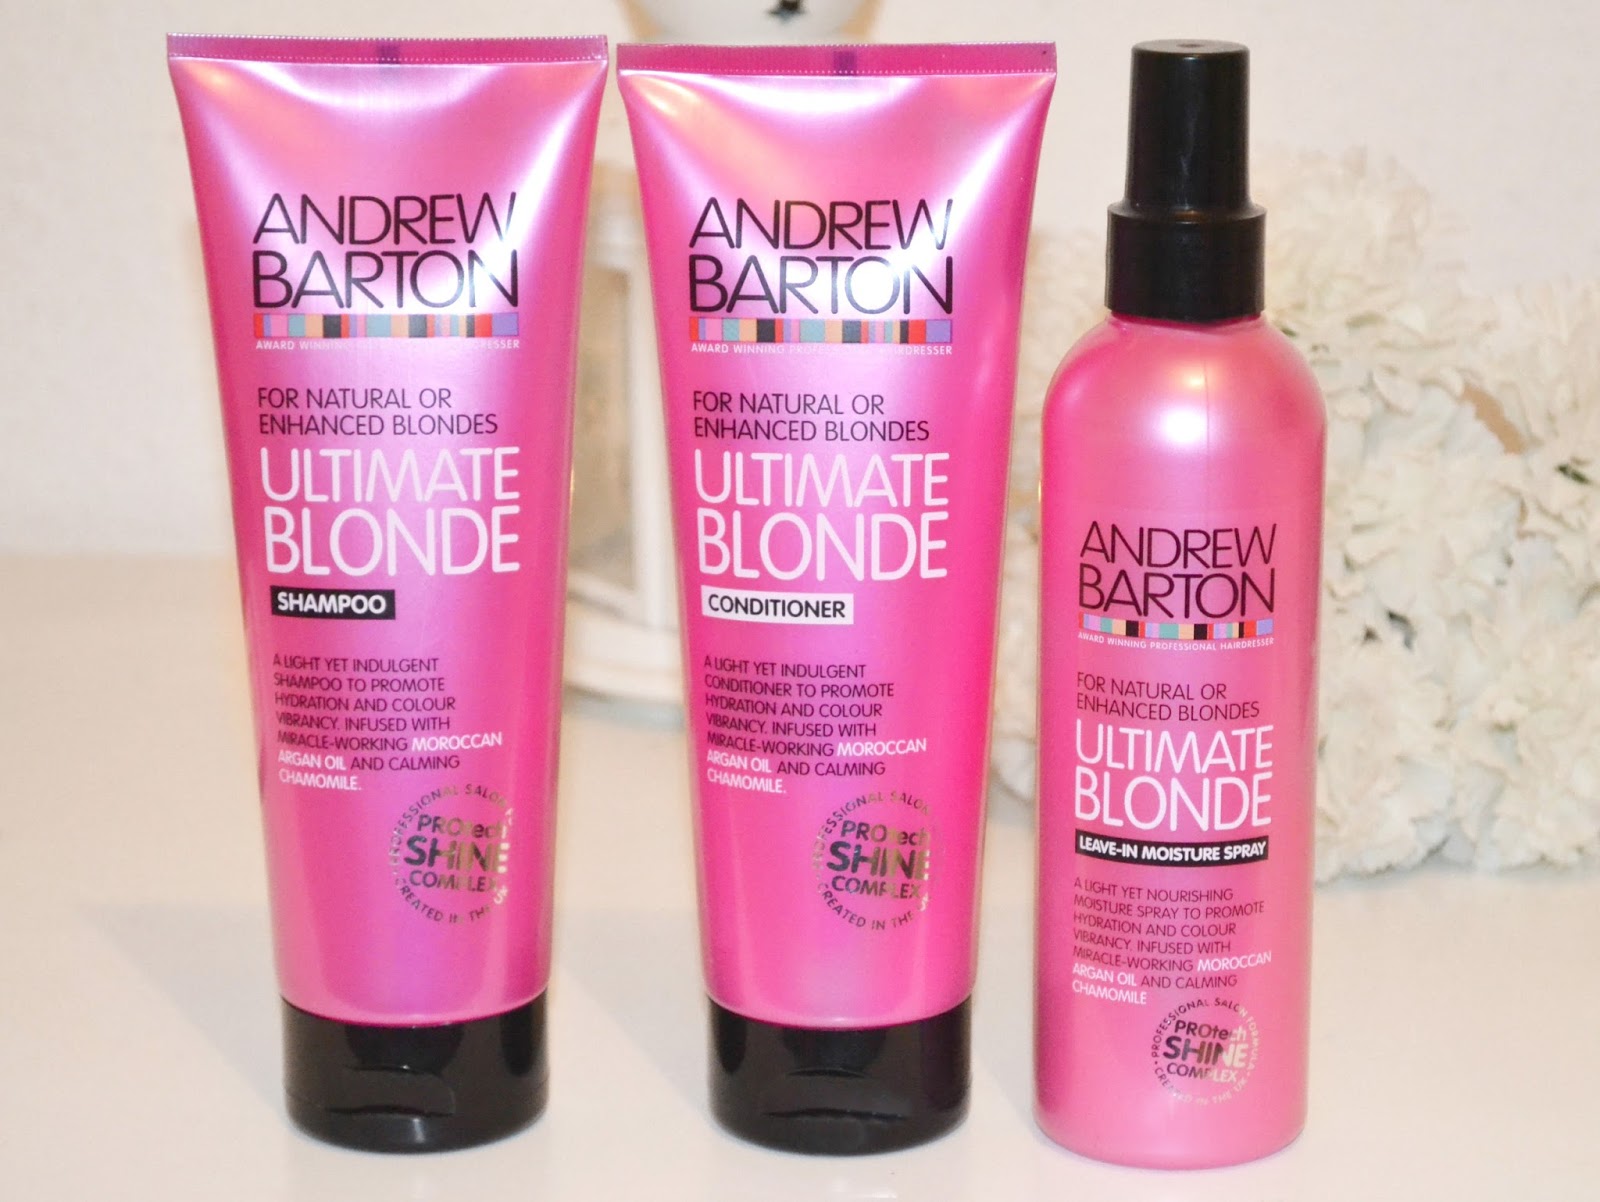 andrew barton ultimate blonde szampon opinie